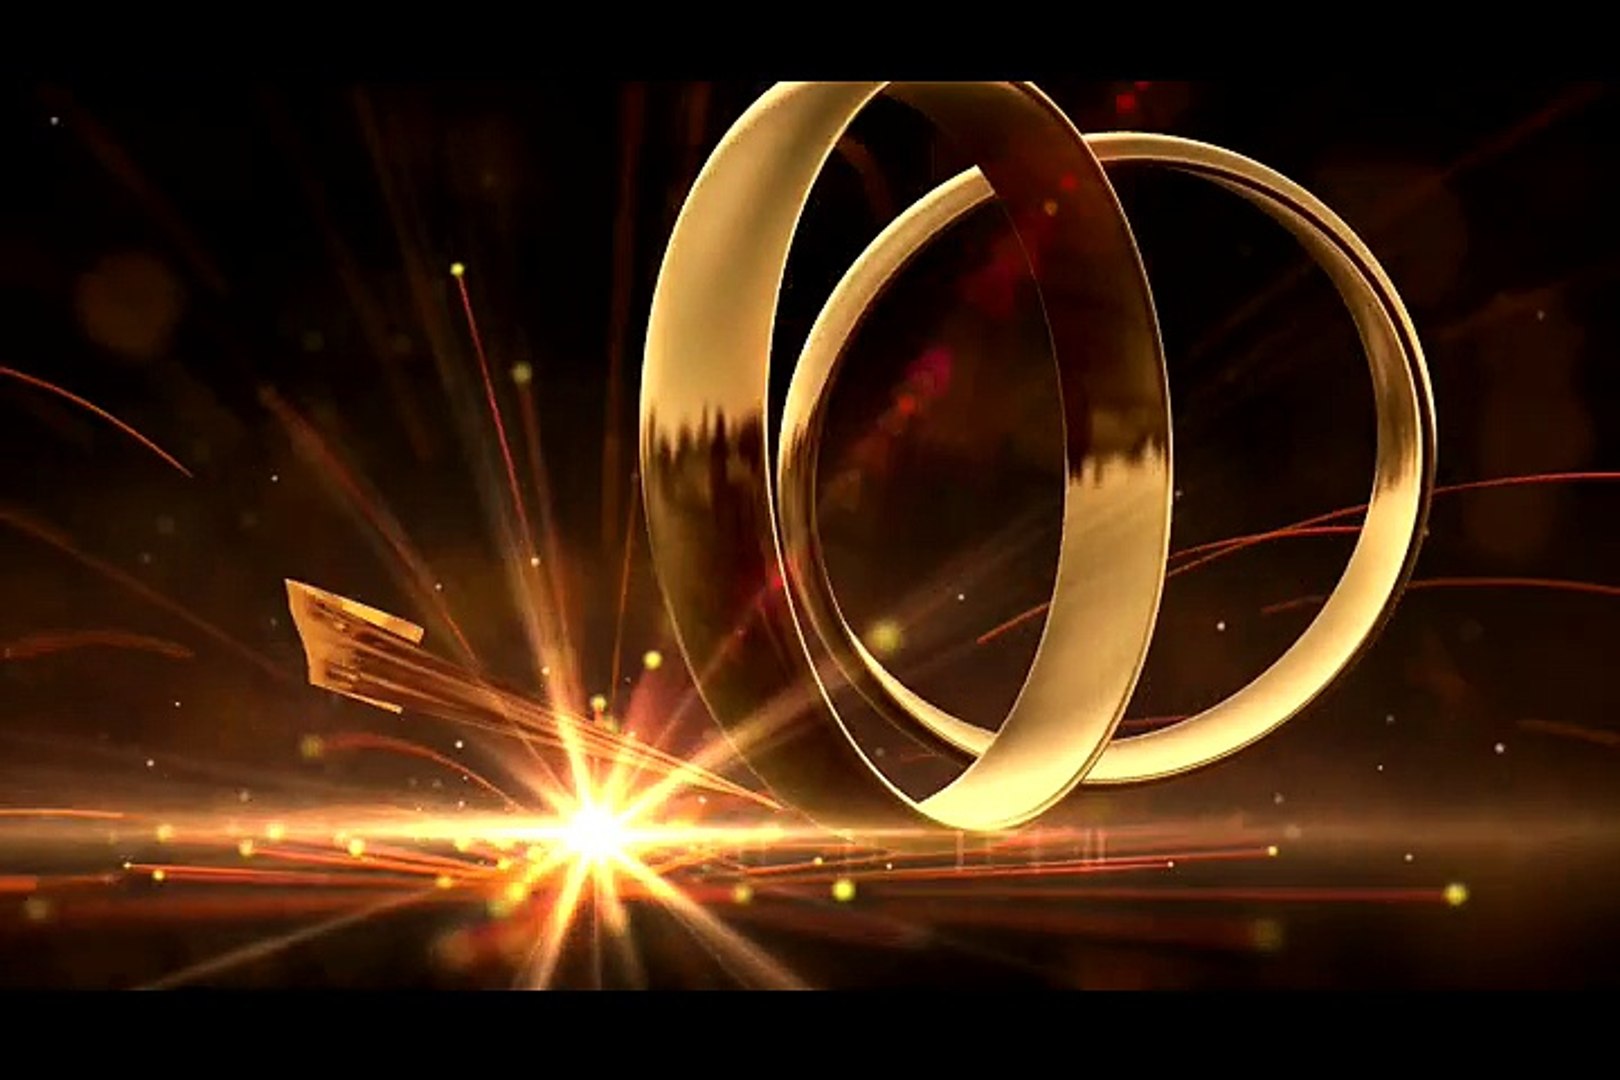 Wedding Rings background croma key for edius kinemaster video mixing - video  Dailymotion